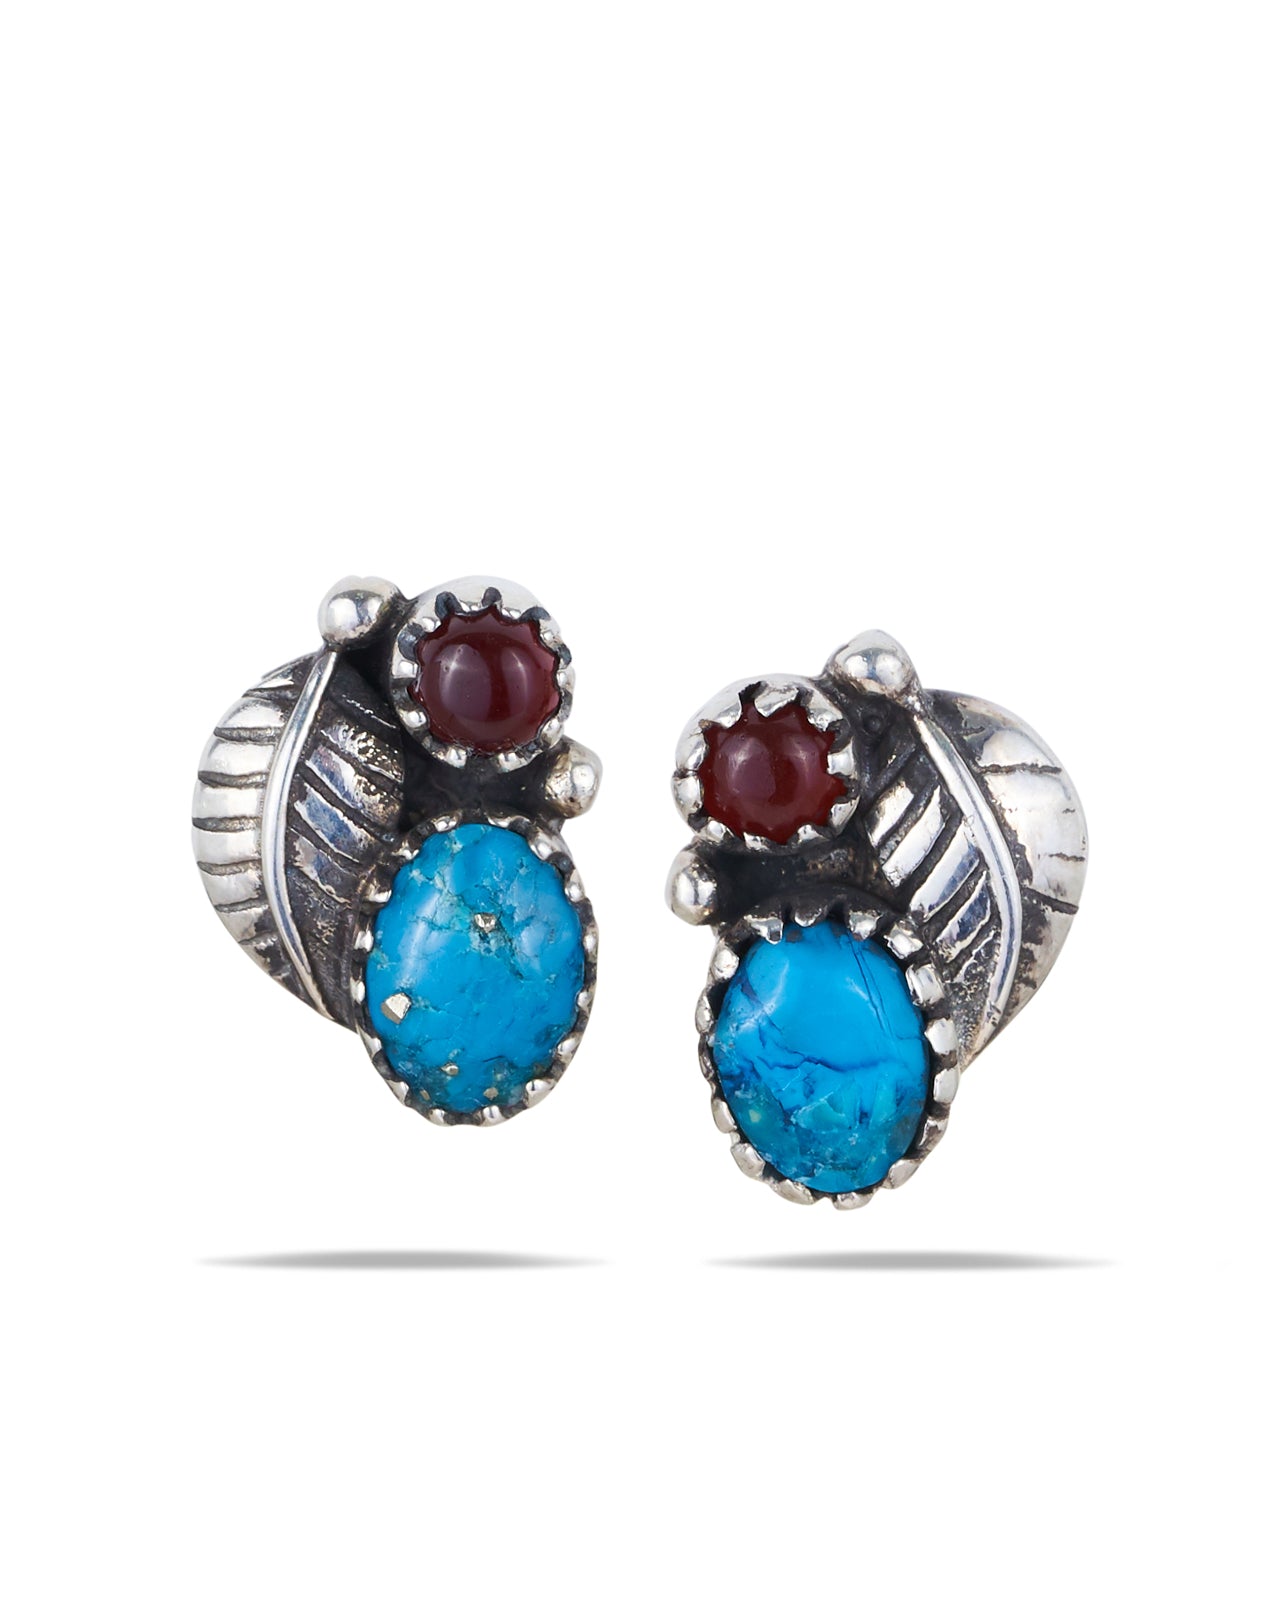 Native American turquoise and carnelian earrings